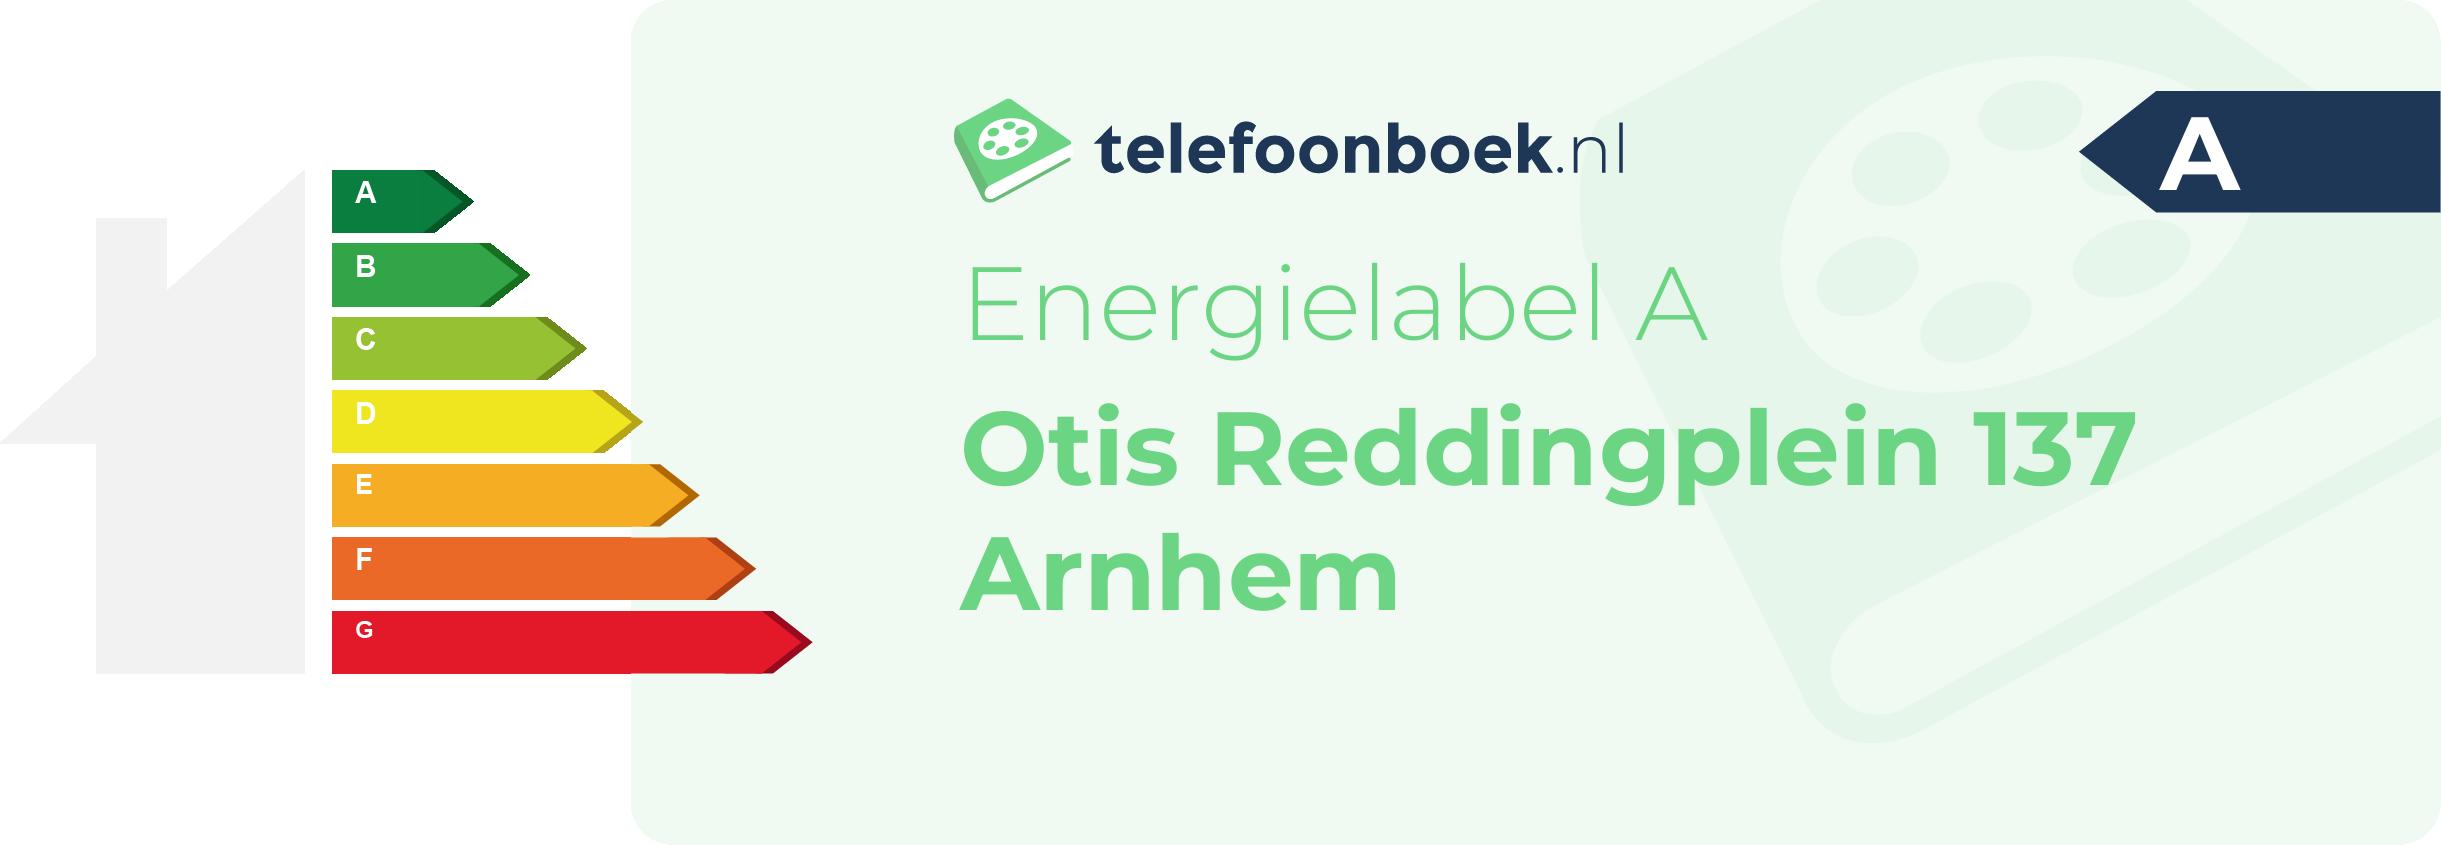 Energielabel Otis Reddingplein 137 Arnhem